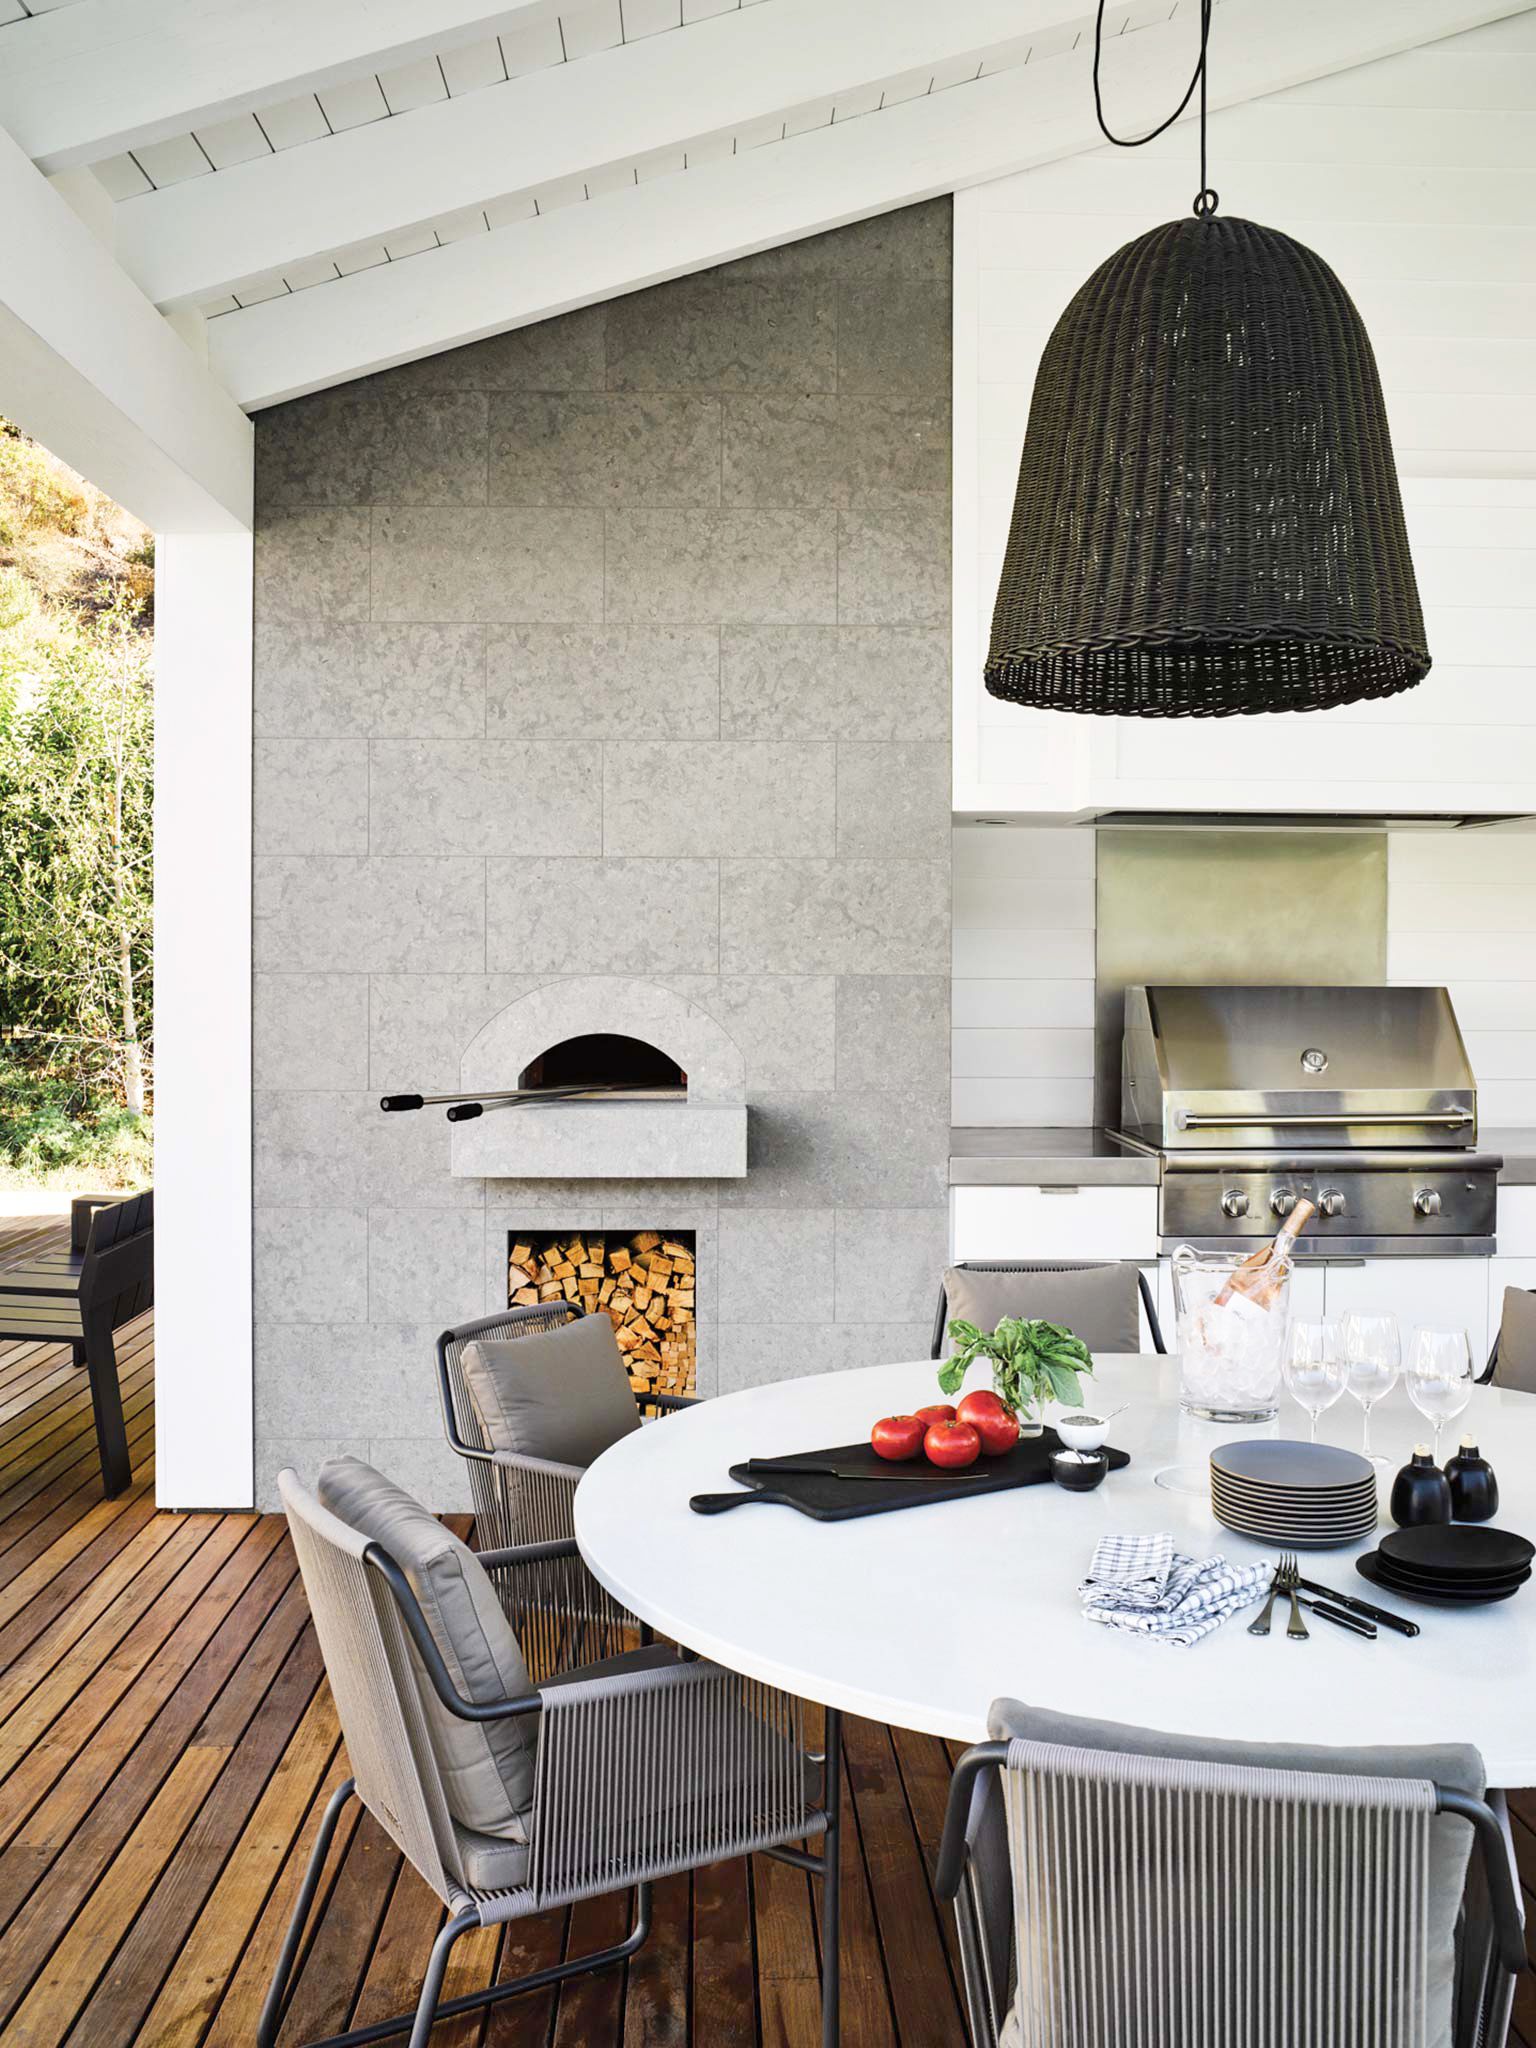 20 Outdoor Kitchen Design Ideas and Pictures   Al Fresco Kitchen ...